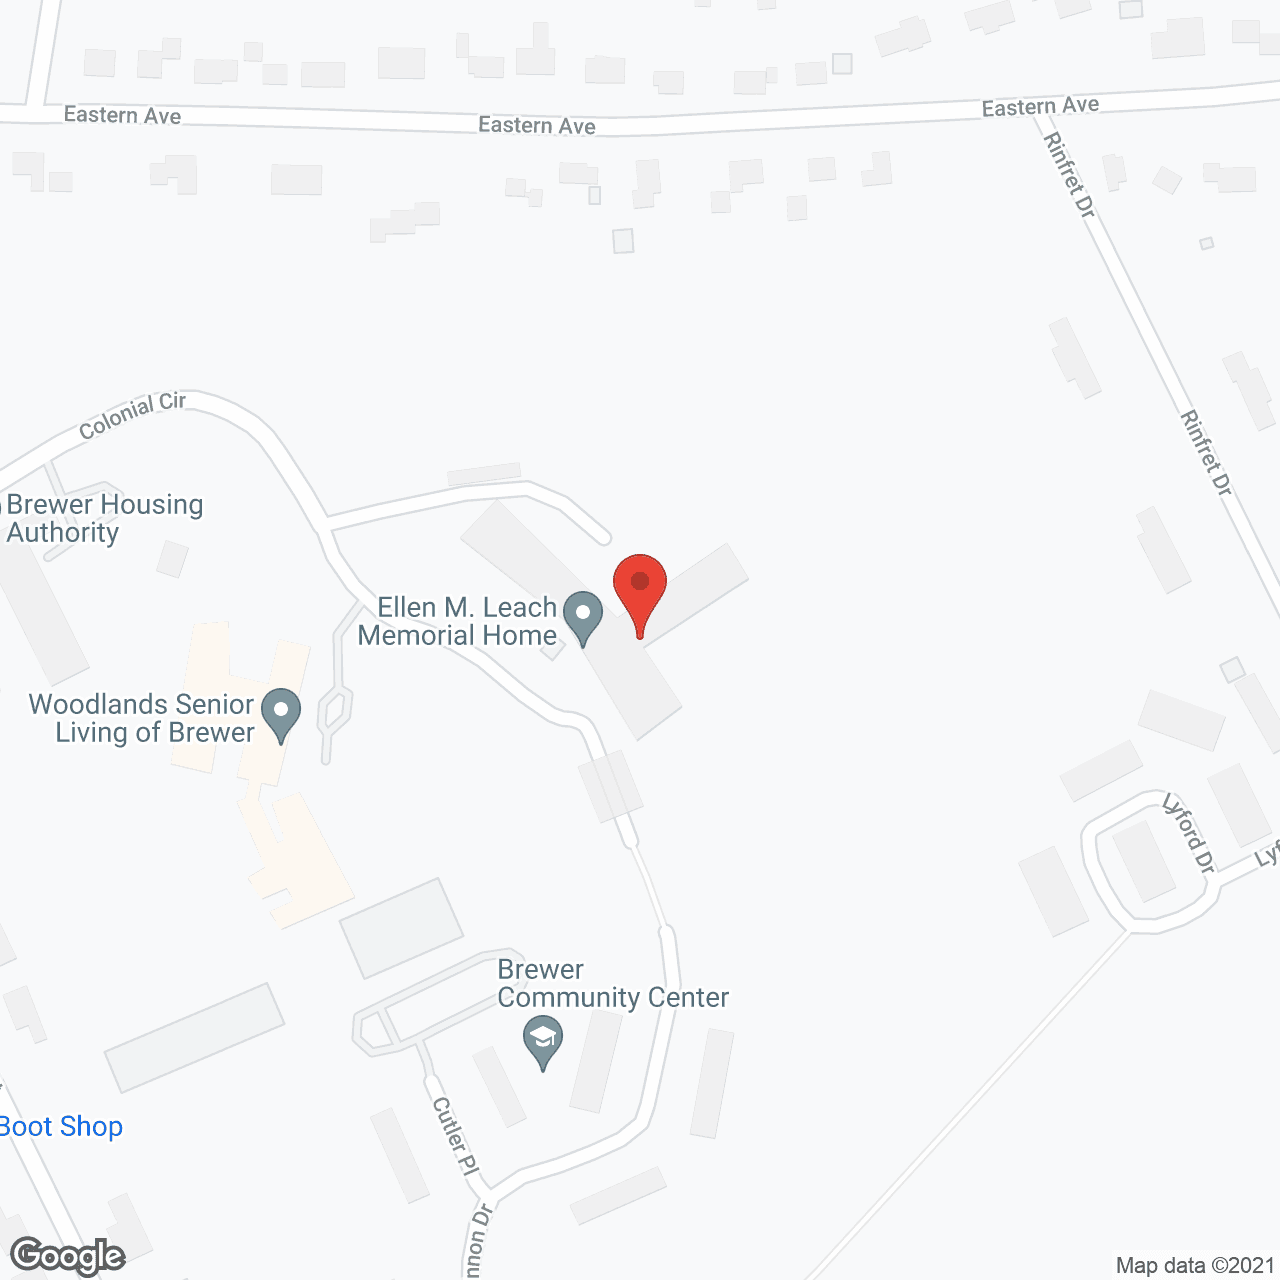 Ellen M. Leach Memorial Home in google map